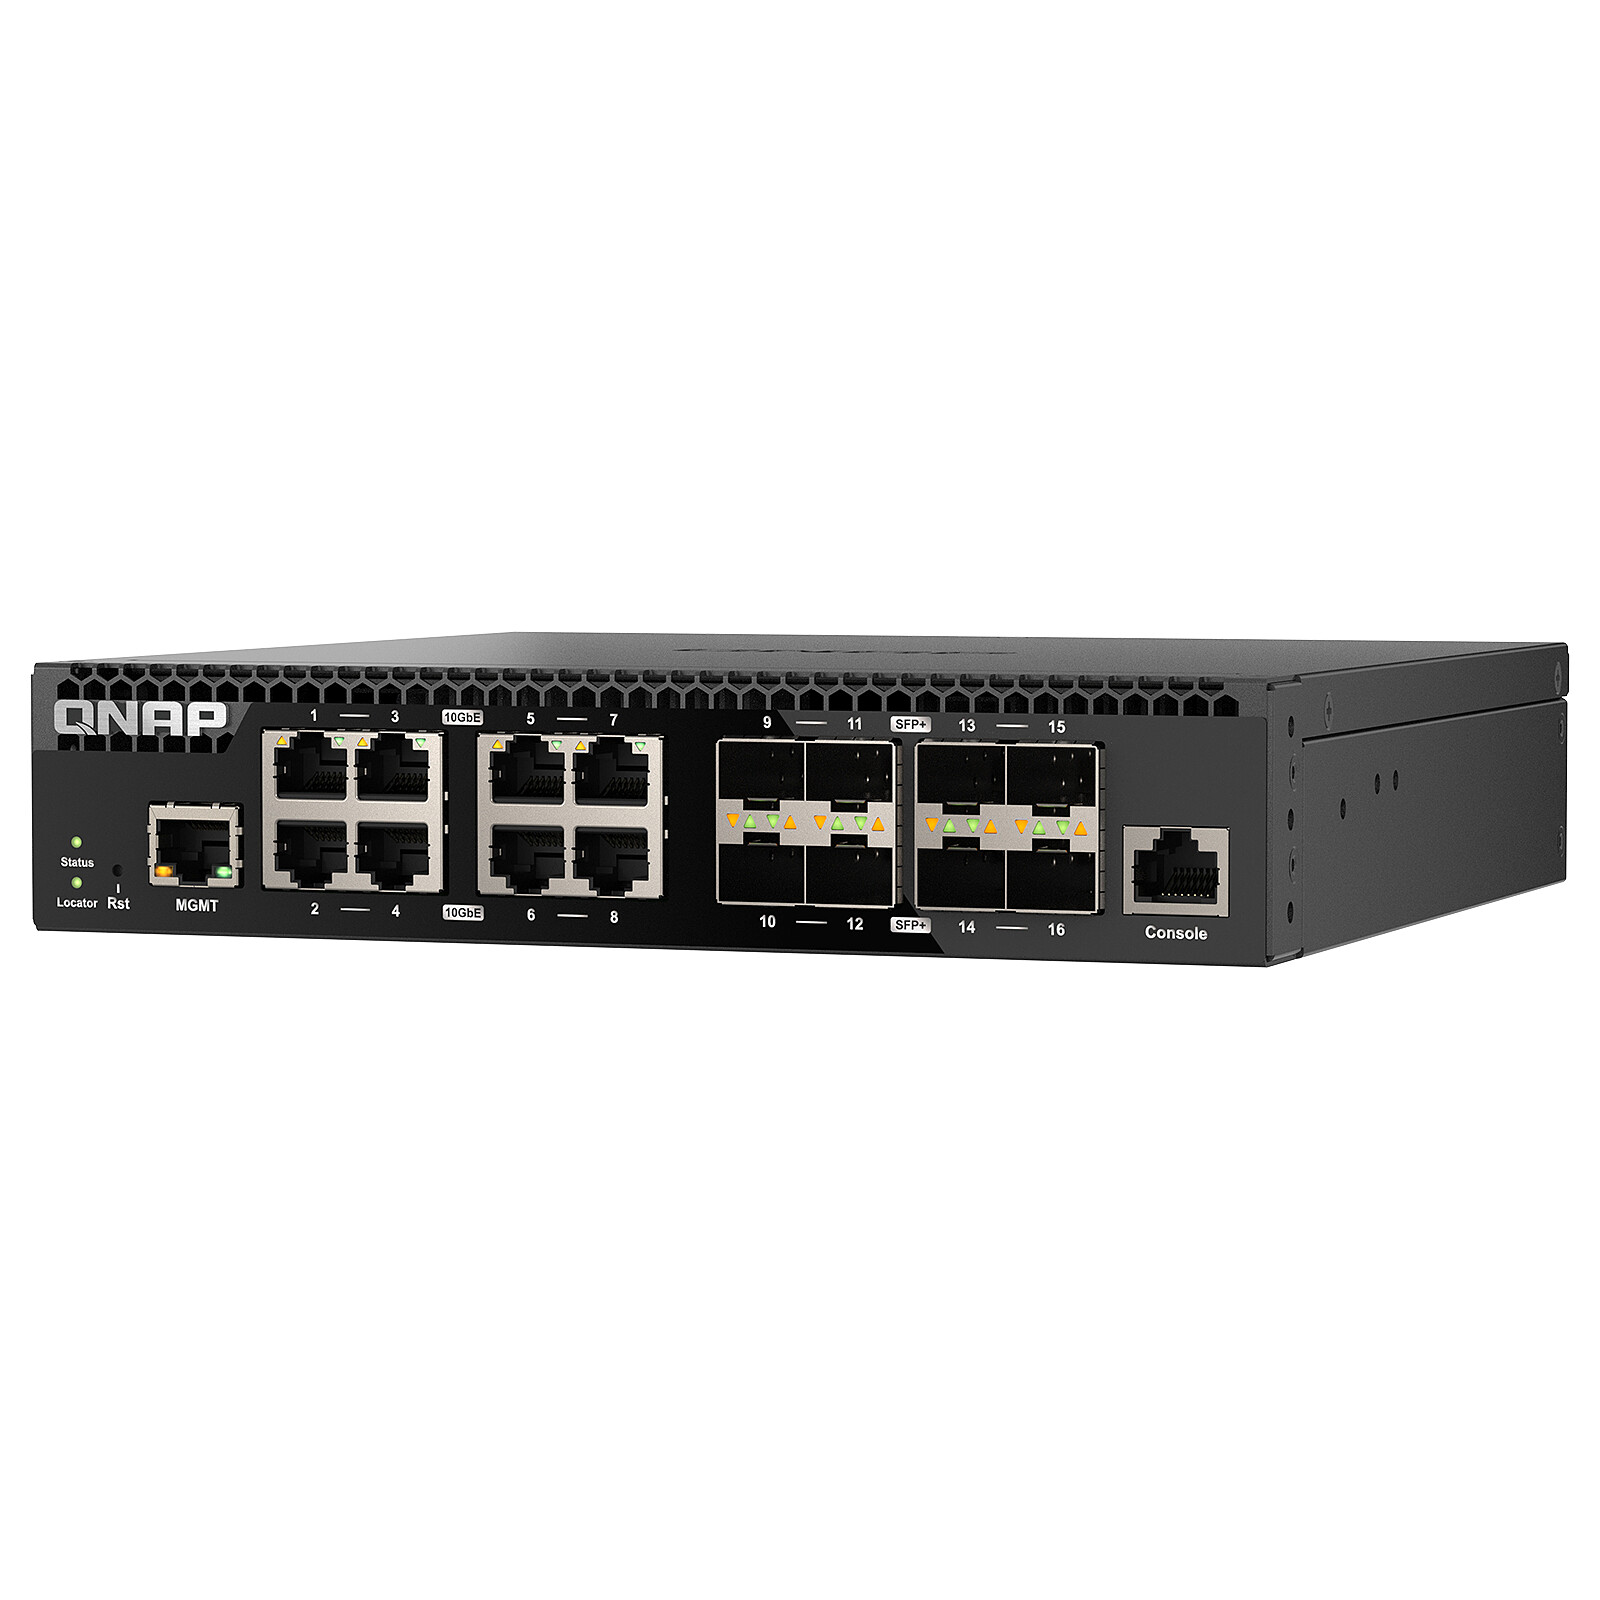 Dexlan 16 Port Gigabit Switch - Network switch - LDLC 3-year warranty